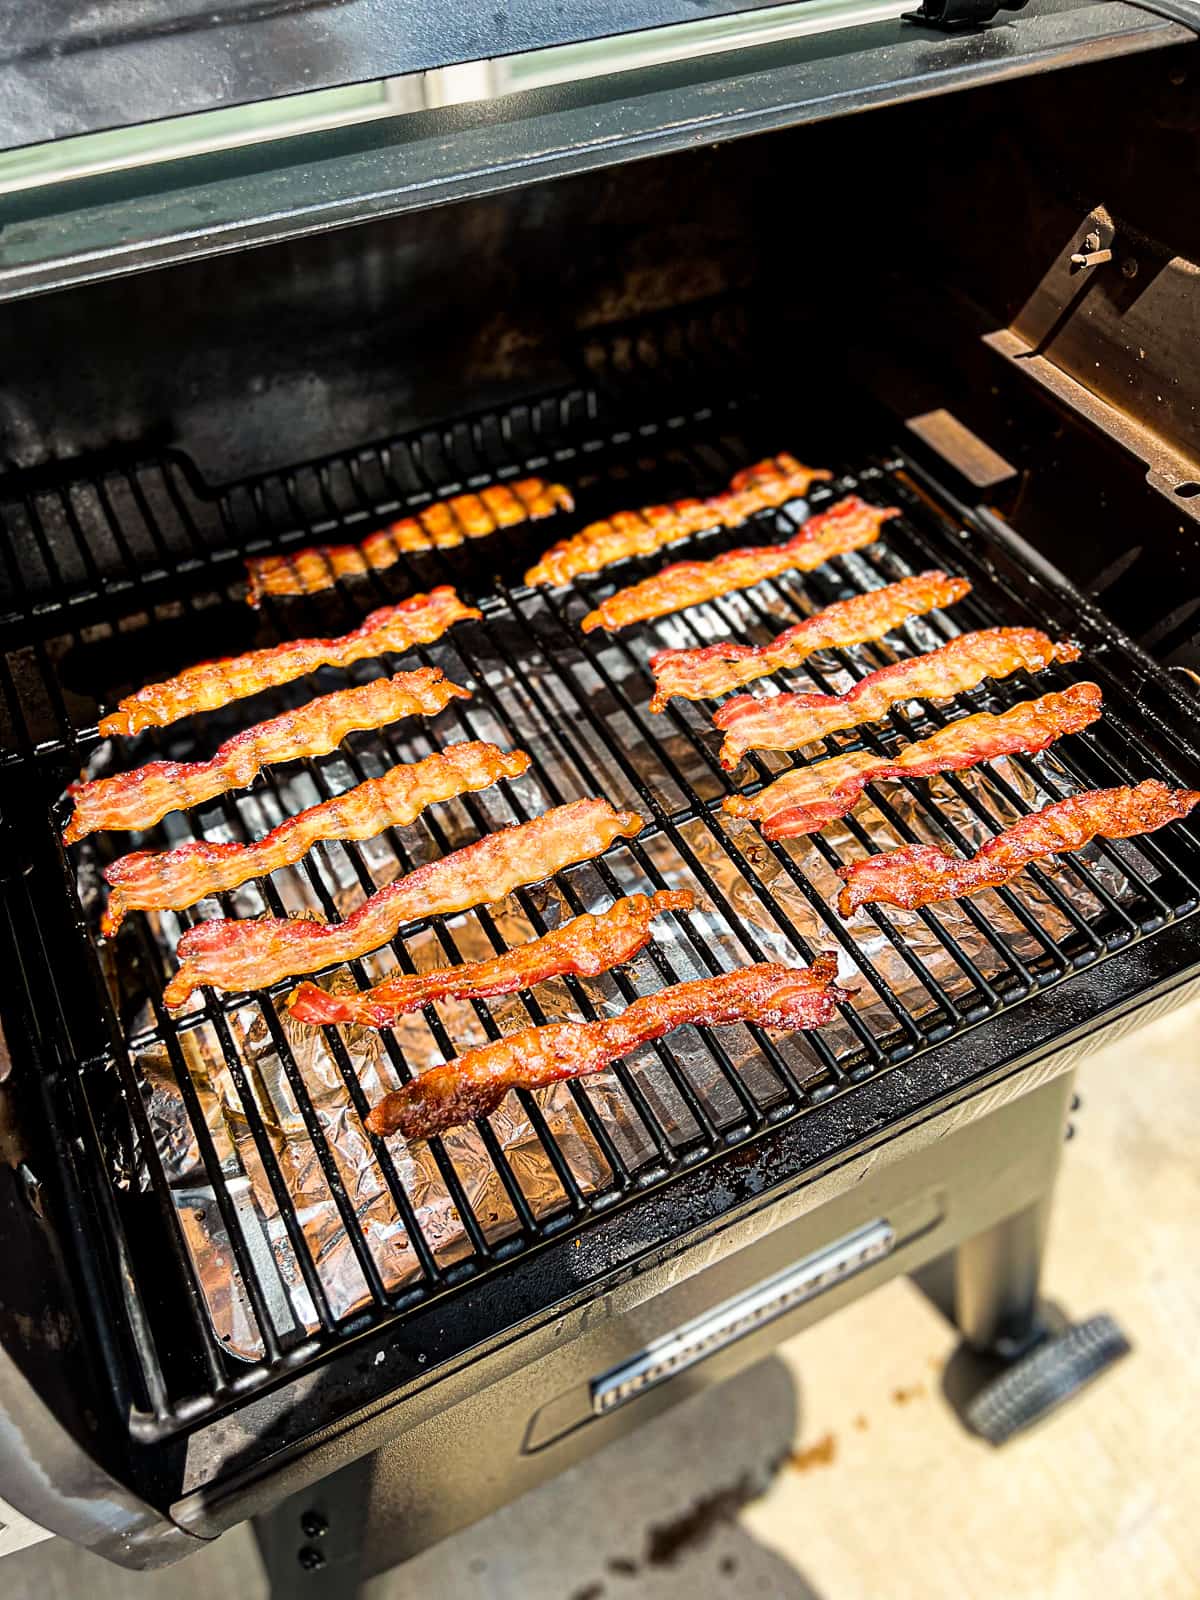 Open Traeger Grills Smoking Bacon strips